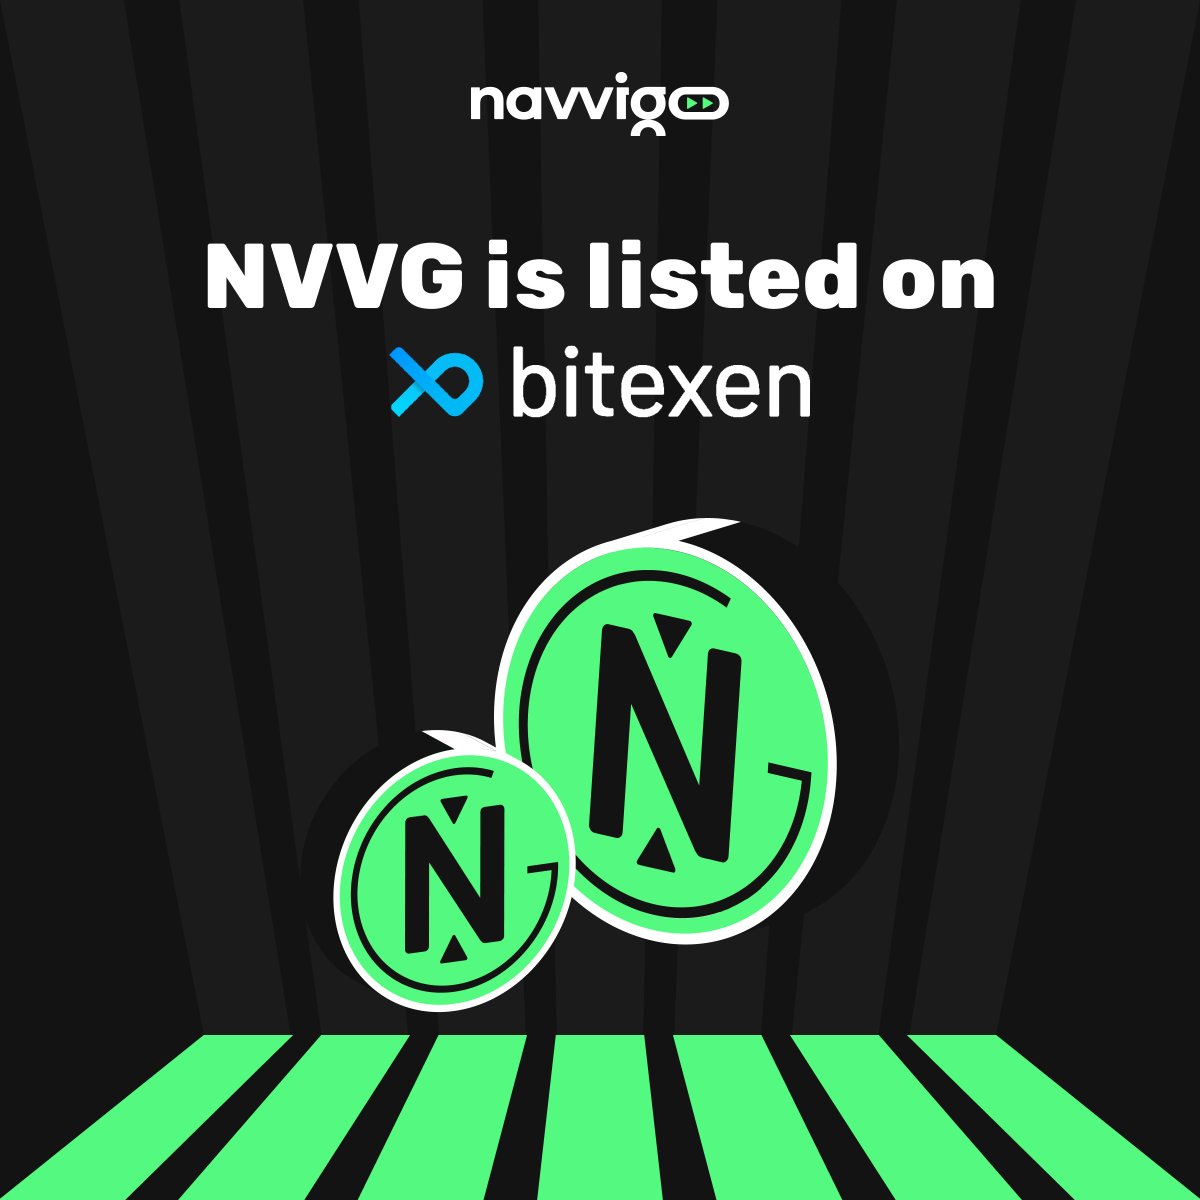 Hello Navvigators!  

(TR) Navvigo (NVVG) bugün Bitexen'de listelendi! 

(EN) Navvigo (NVVG) is listed on Bitexen today!

#navvigo #navvigator #navvigocom #crypto #navvigoapp #blockchain #nft #web3📷 #navigationapp #navigation